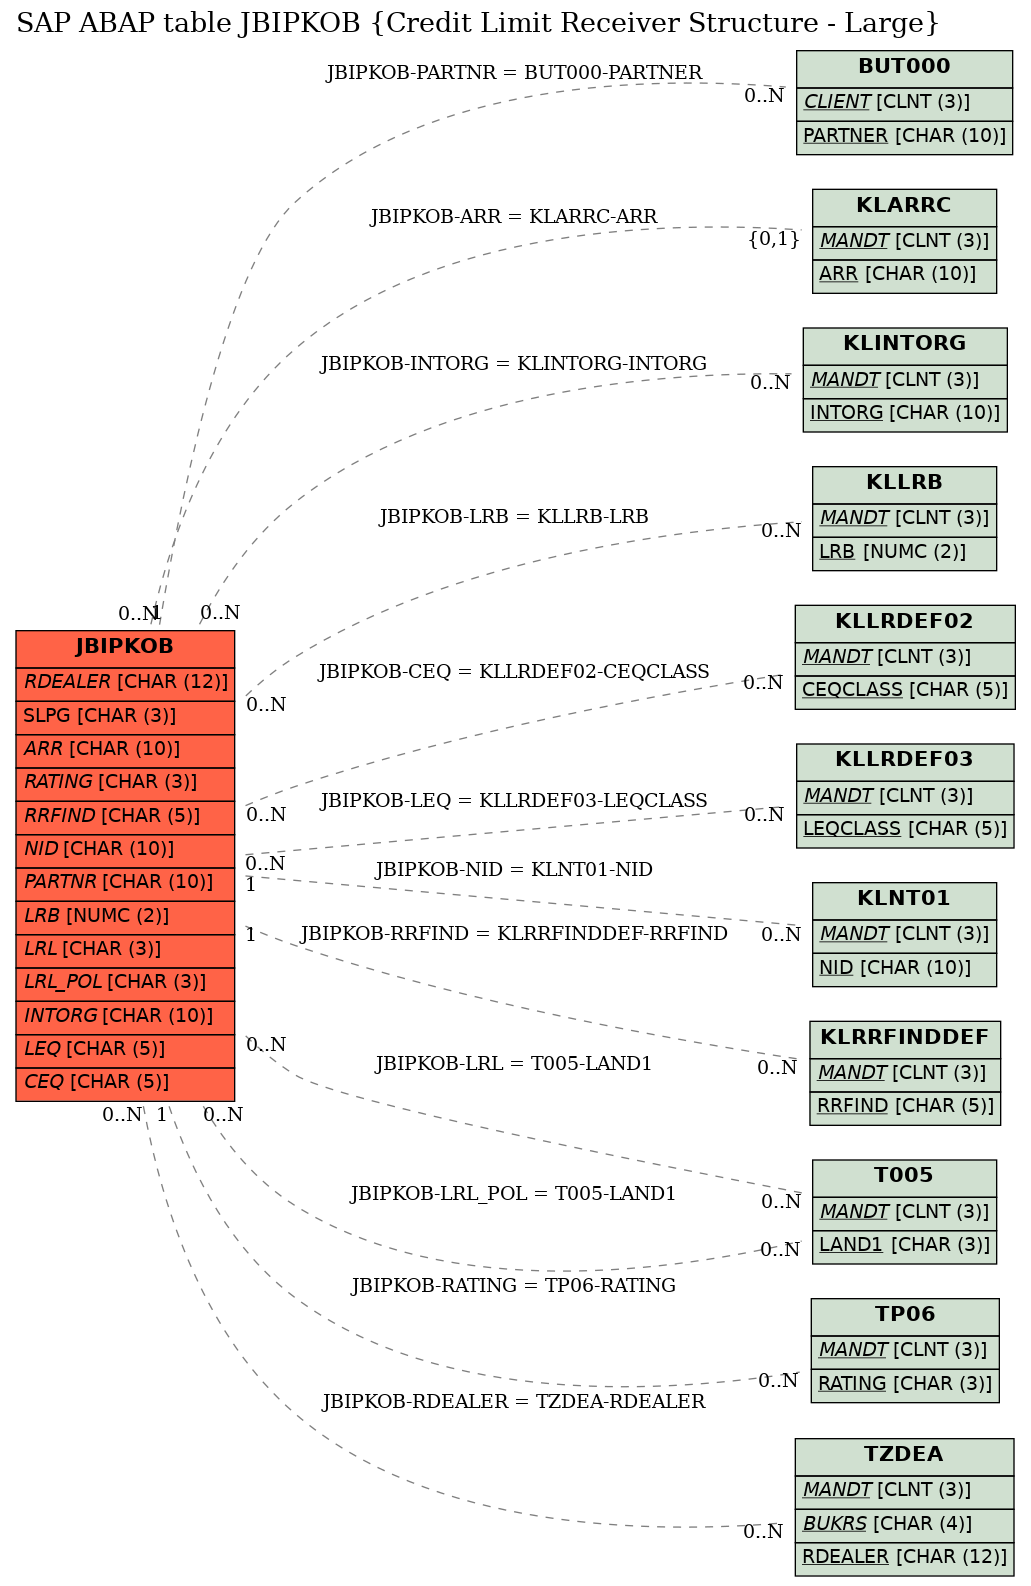 E-R Diagram for table JBIPKOB (Credit Limit Receiver Structure - Large)